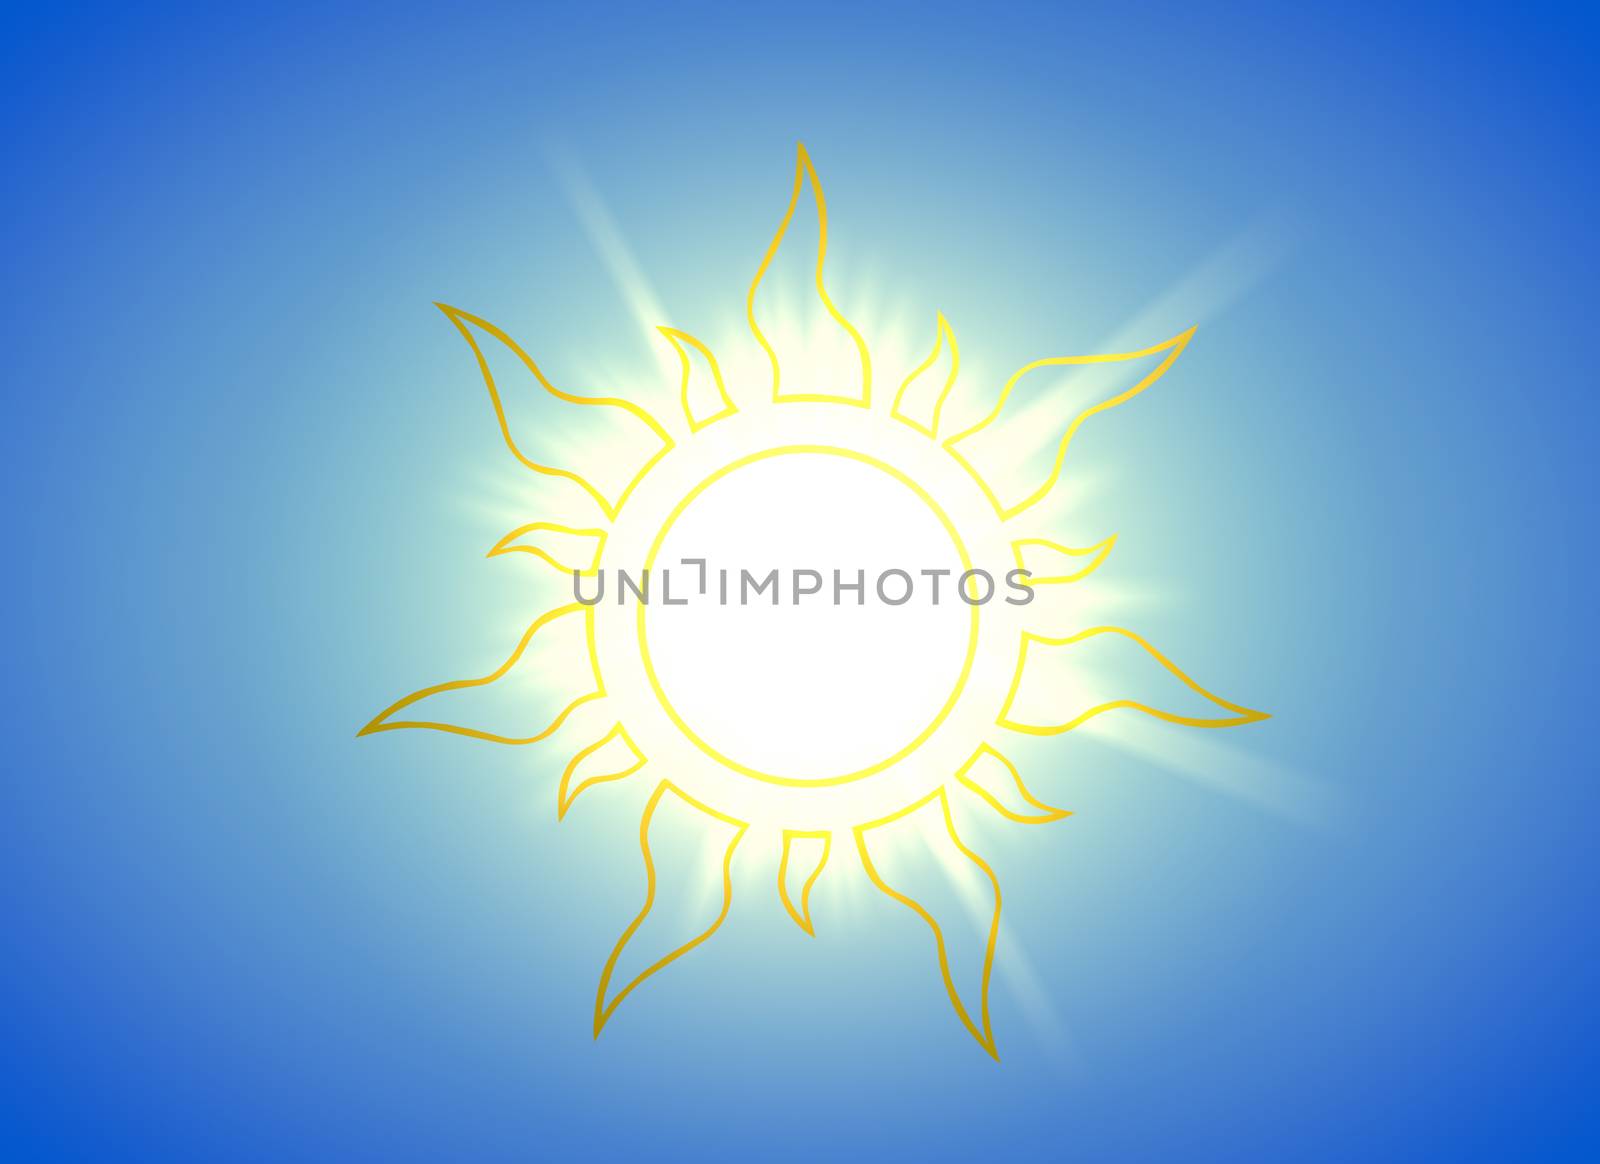 sun background